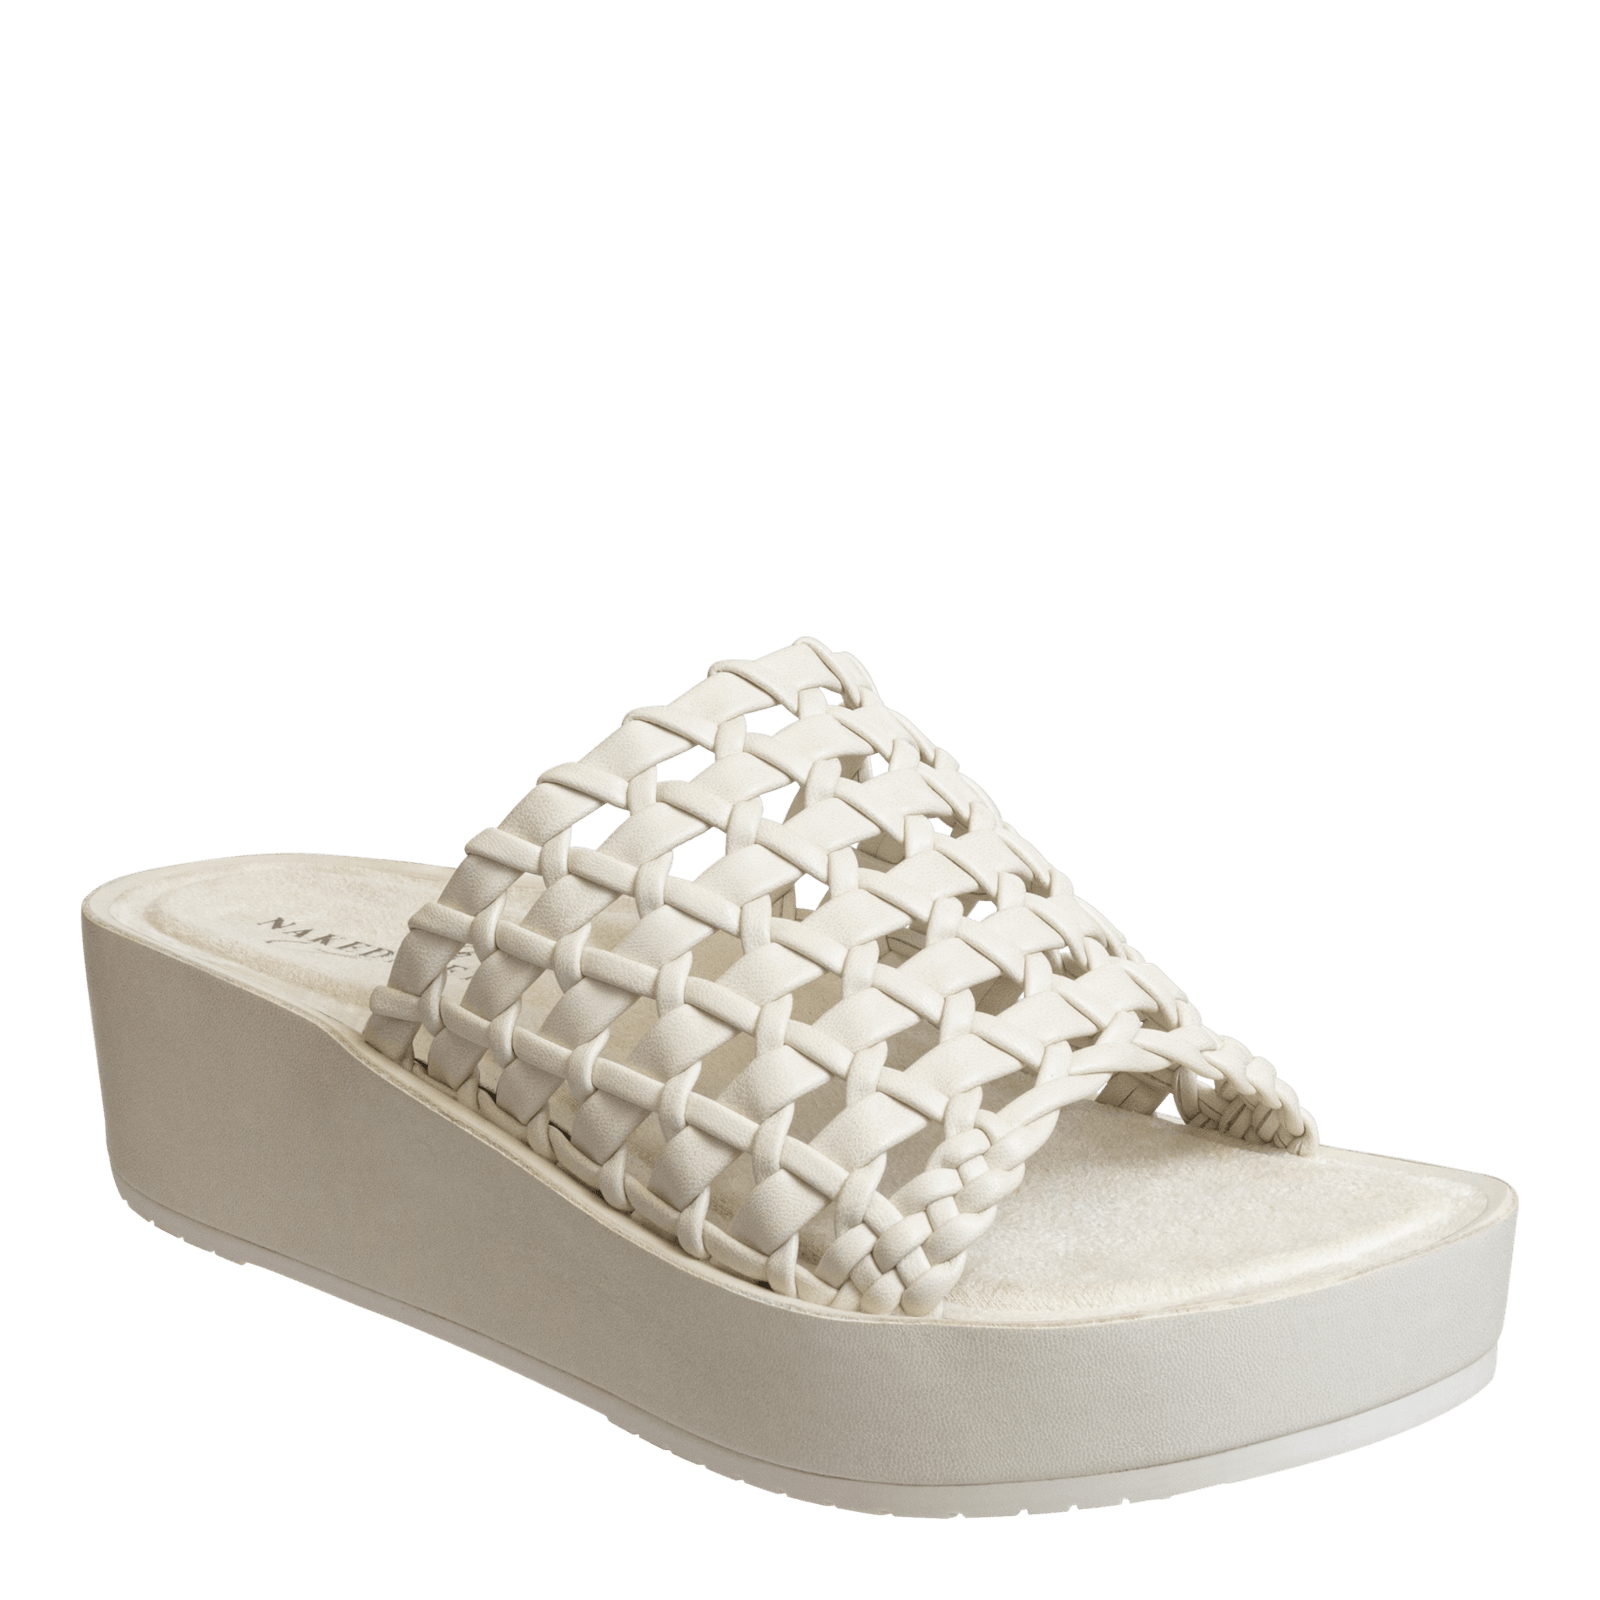 NAKED FEET - CYPRUS in CHAMOIS Platform Sandals WOMEN FOOTWEAR NAKED FEET 